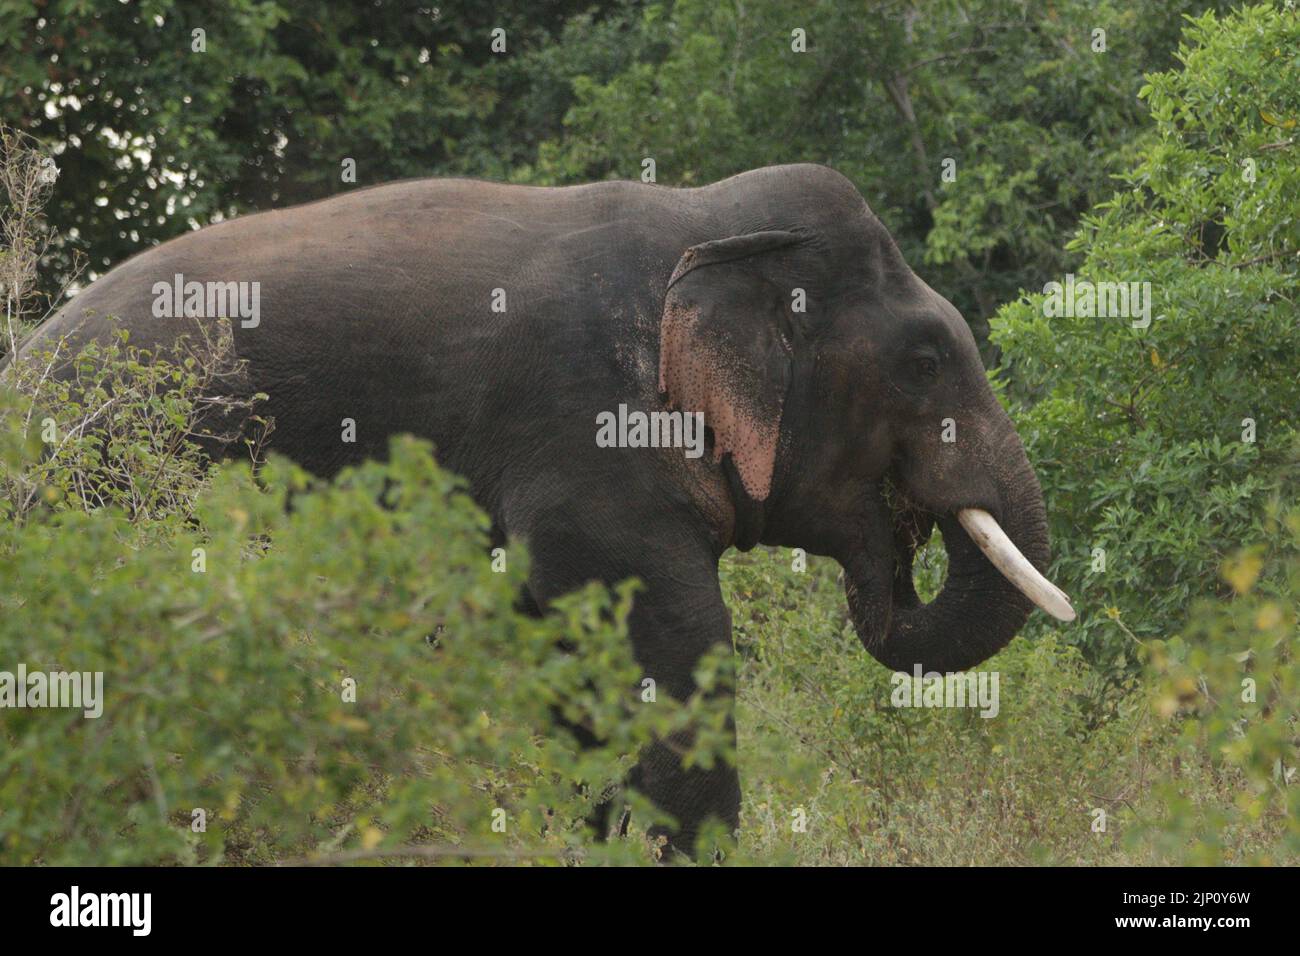 Elephants of Sri Lanka in the Wild. Stock Photo